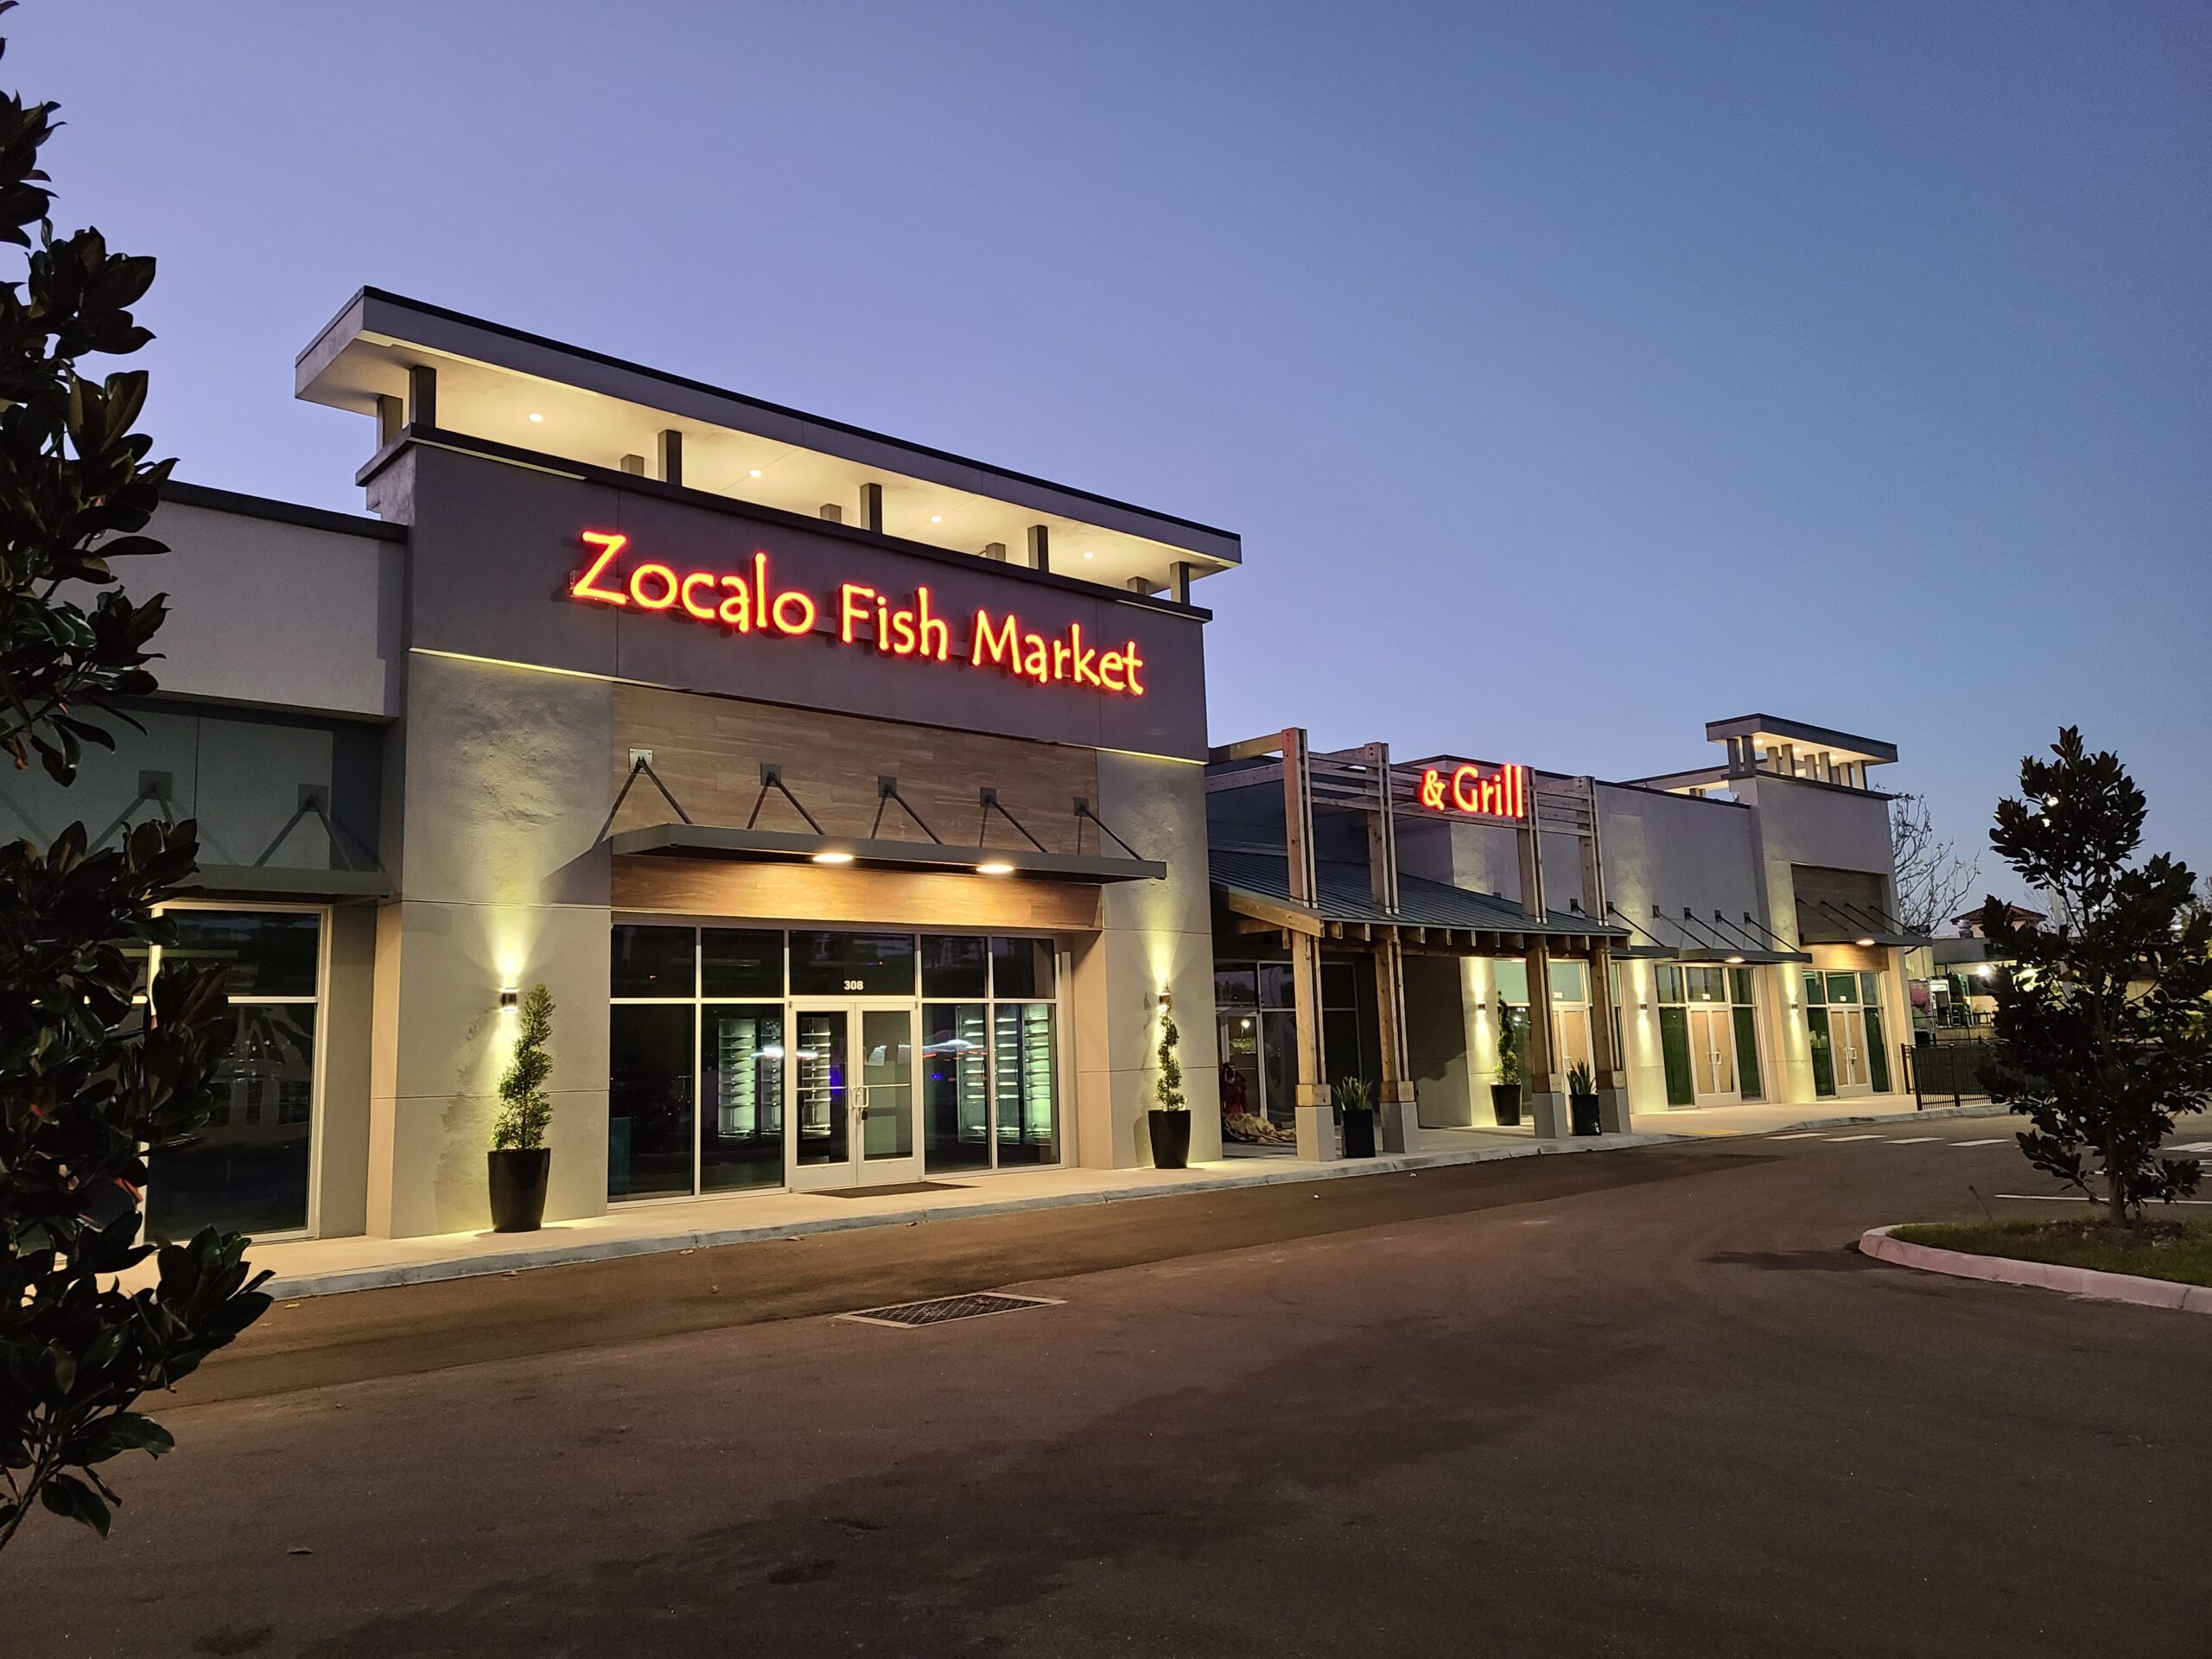 Zocalo Fish Market Store Front at Night